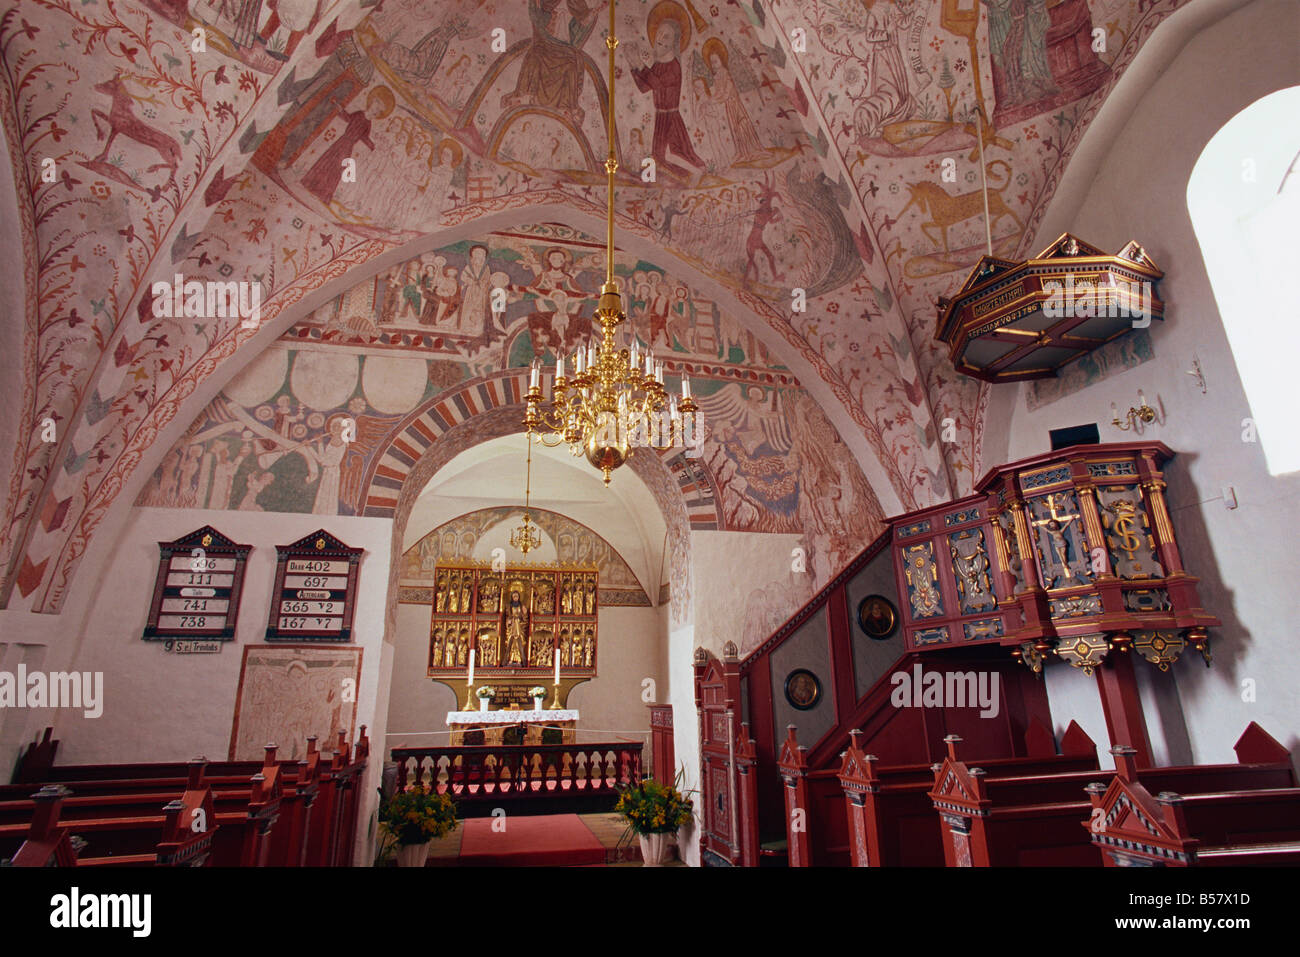 Interno della chiesa Keldby con affreschi di Elmelunde Keldby Master Mon Danimarca Scandinavia Europa Foto Stock